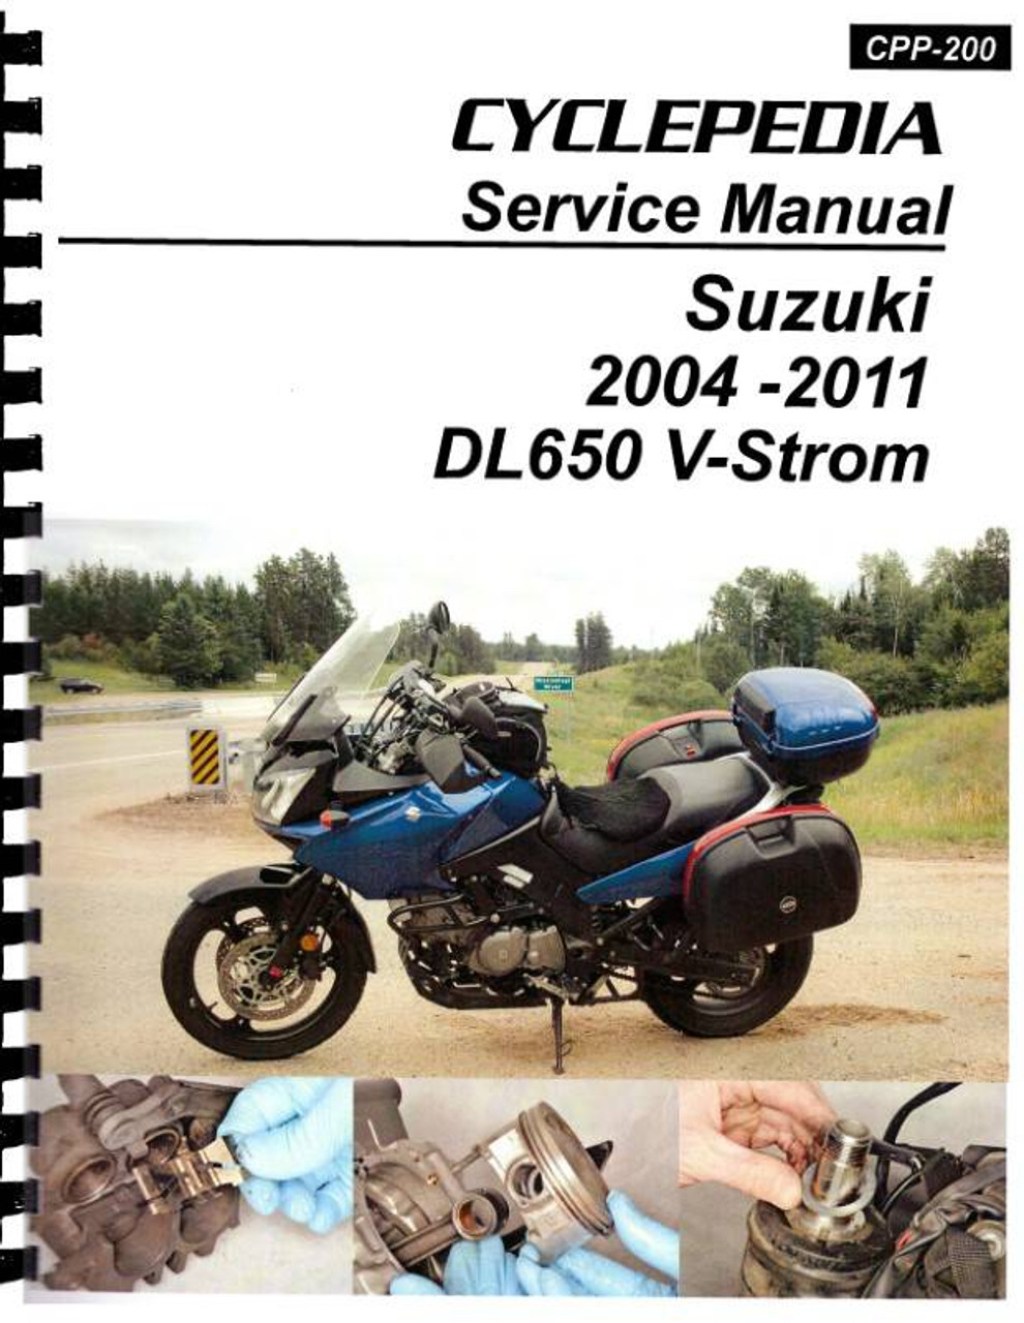 2011 suzuki v strom 650 owners manual - Suzuki DL V-Strom Service Manual: -